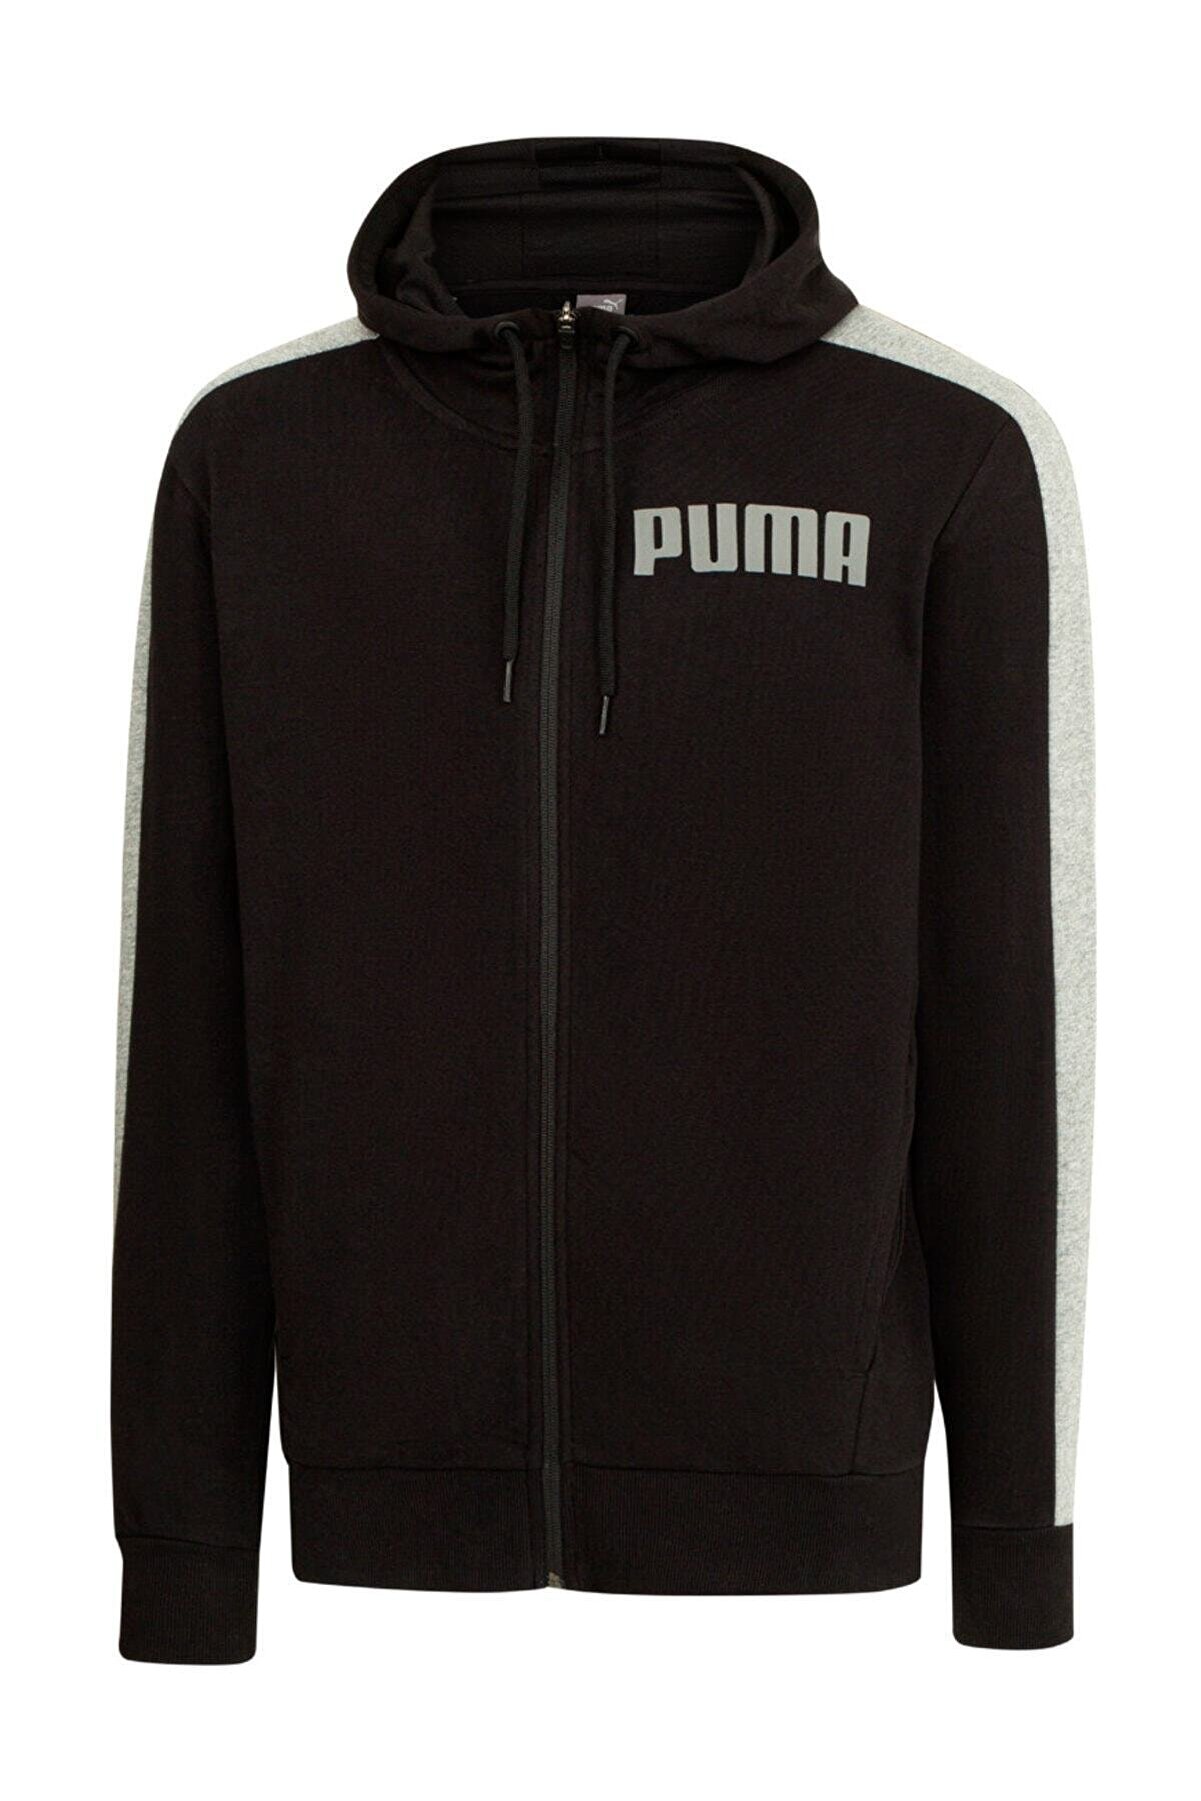 Puma CONTRAST FZ HOODY FT M Siyah Erkek Sweatshirt 101119496